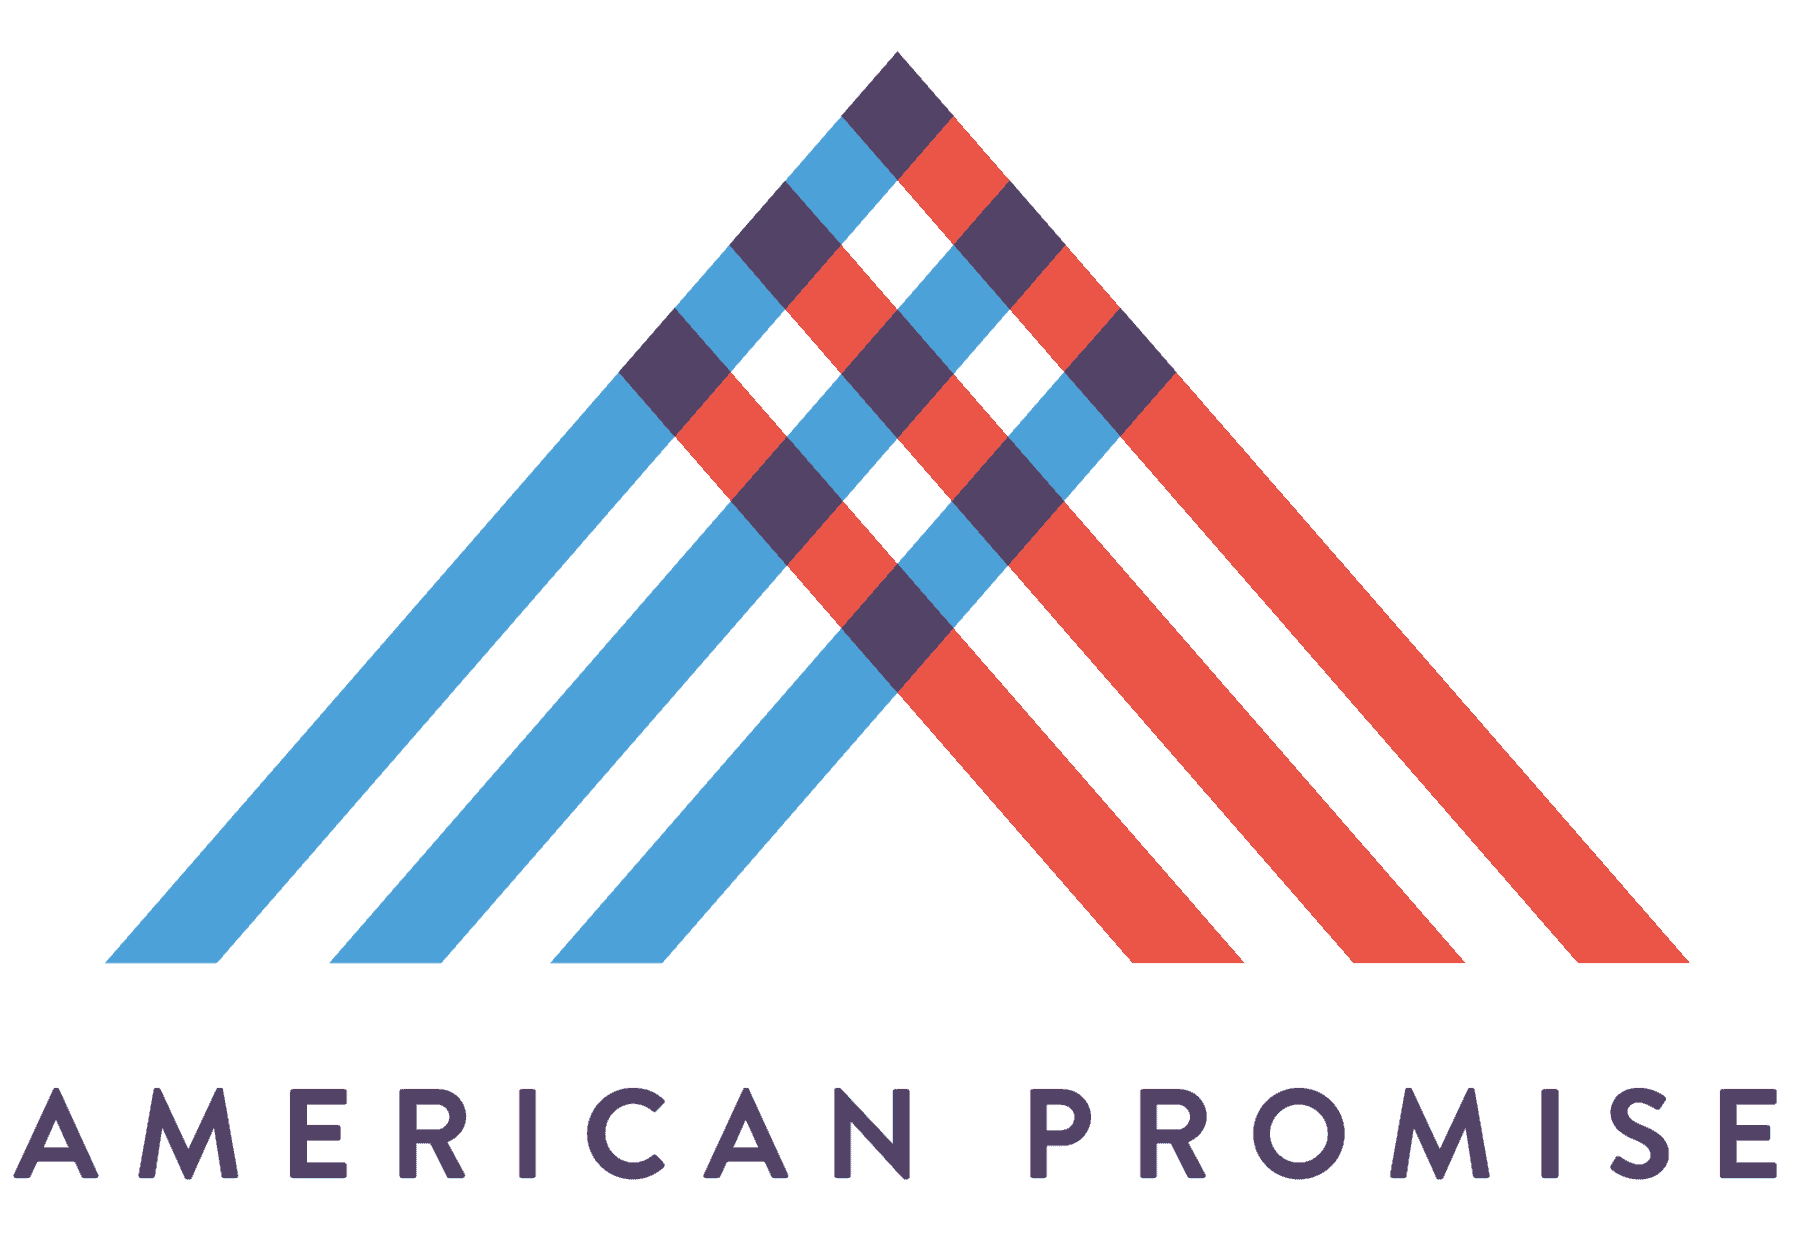 american promise sailboat